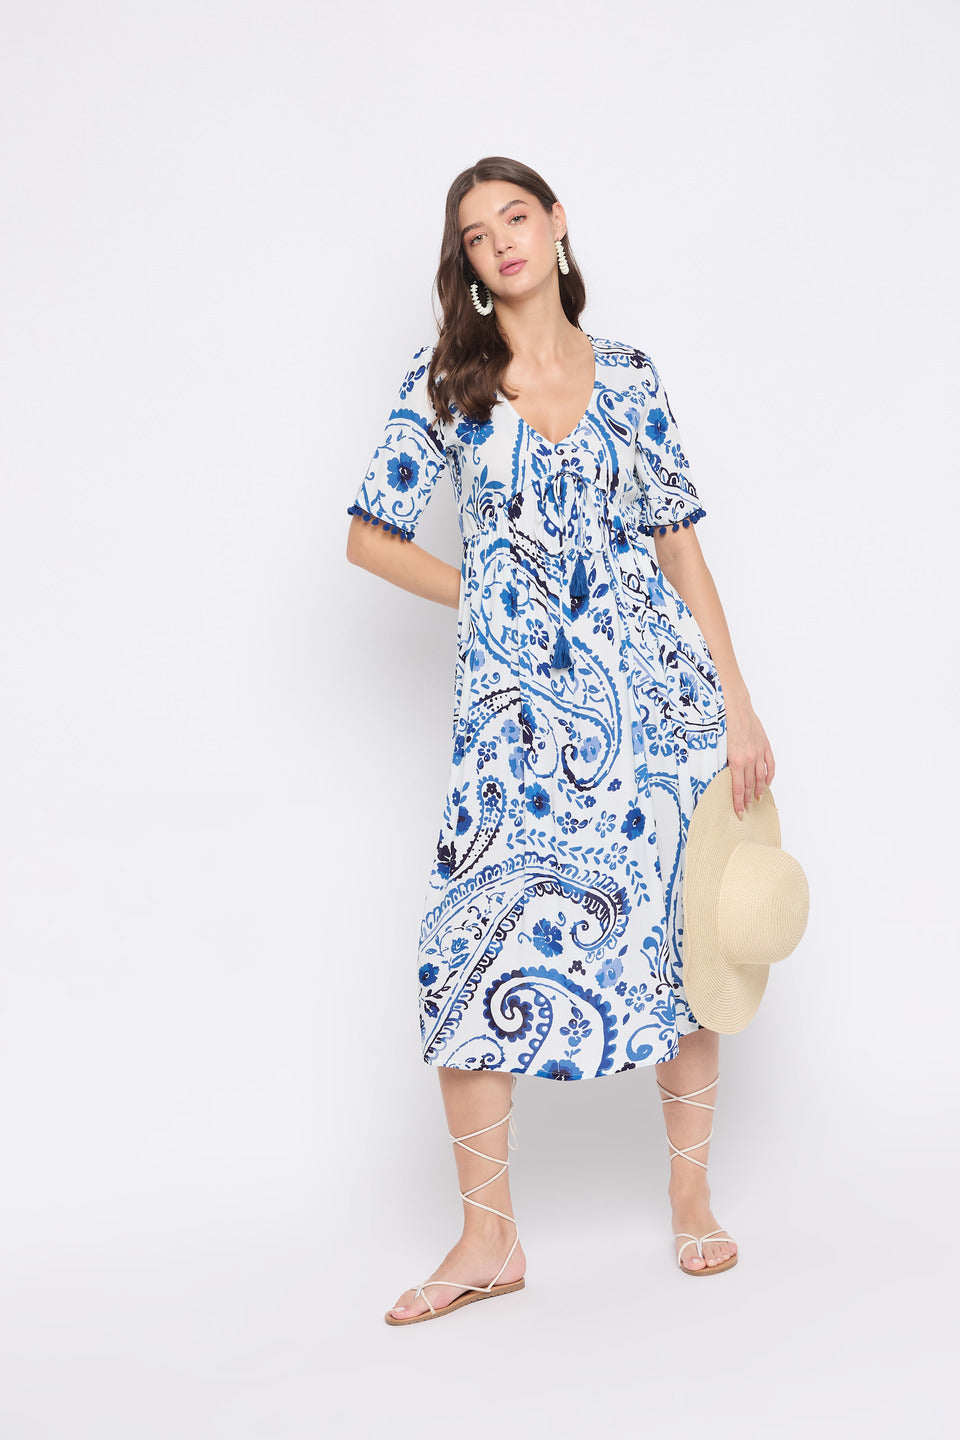 Paisley & Floral Print Blue & White  Polyester Midi Dress